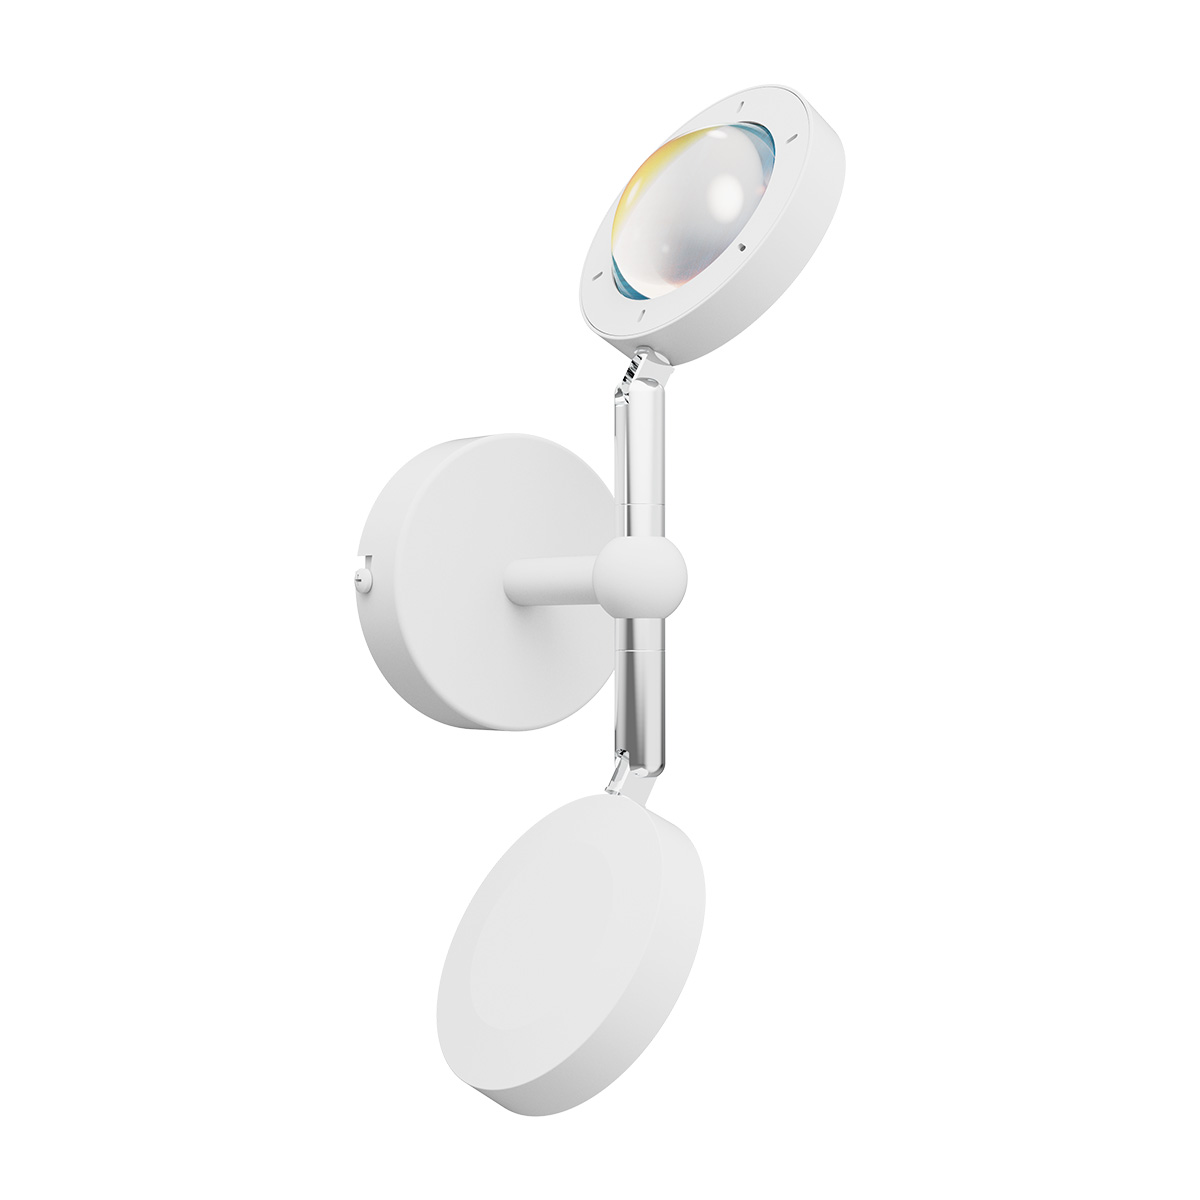 Tangla lighting - TLW7202-02WA - LED Wall lamp 2 Heads - metal + glass - sand white - Aura - magnify